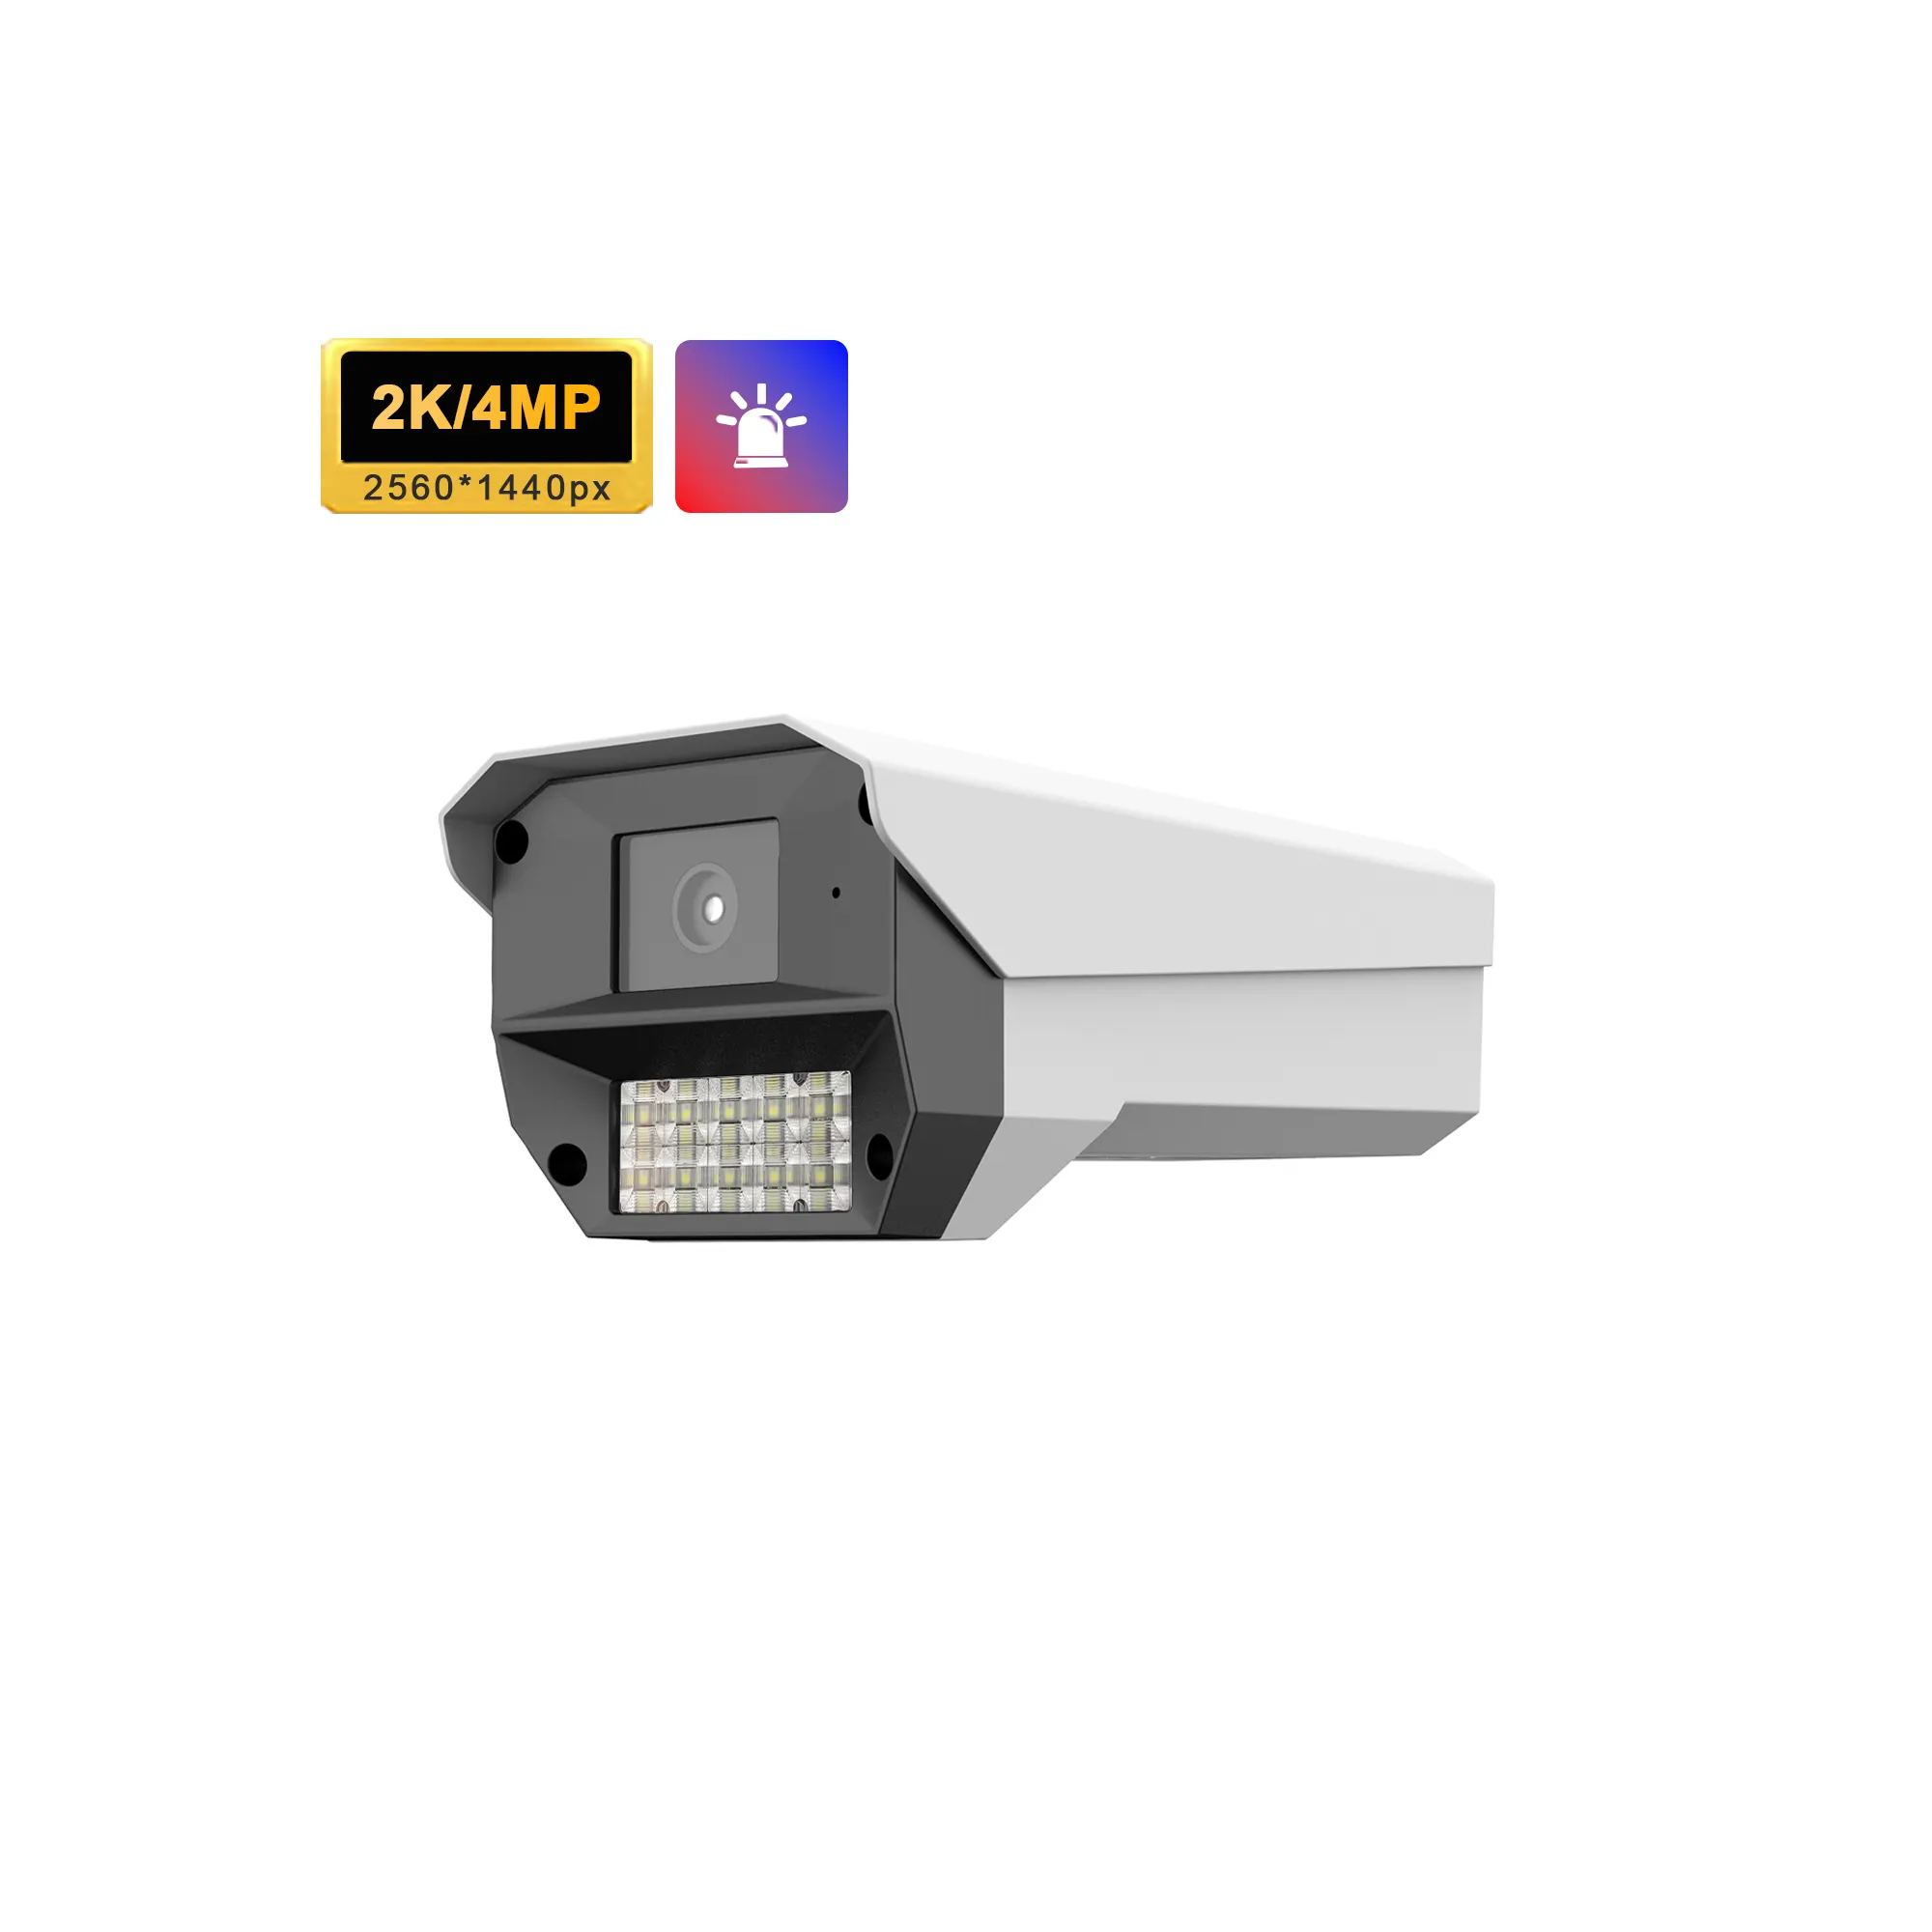 Nuovo Ip66 POE IP Bullet CCTV telecamera esterna Auto Tracking 4mp Full Color visione notturna Starlight Ip Dome CCTV POE telecamera di sicurezza